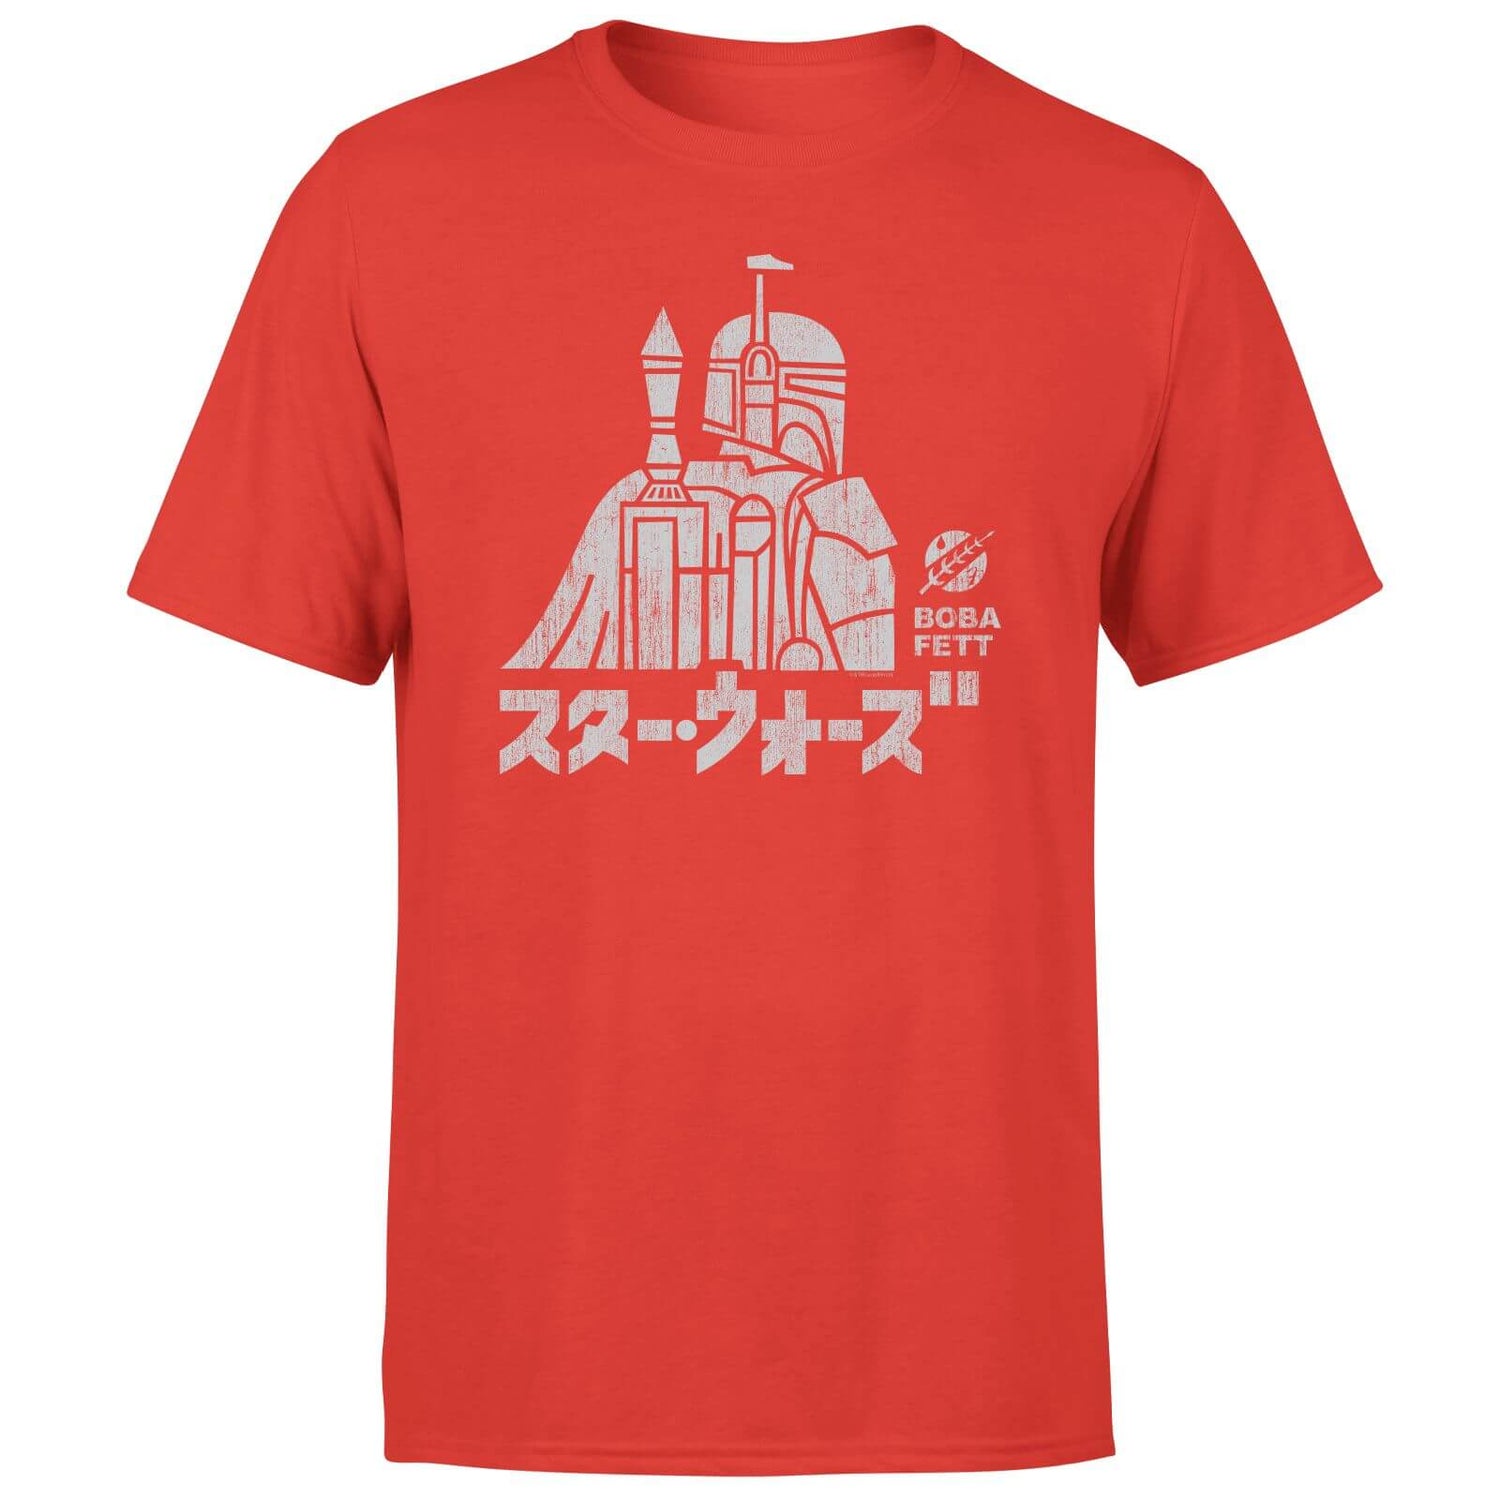 Star Wars Kana Boba Fett Men's T-Shirt - Red